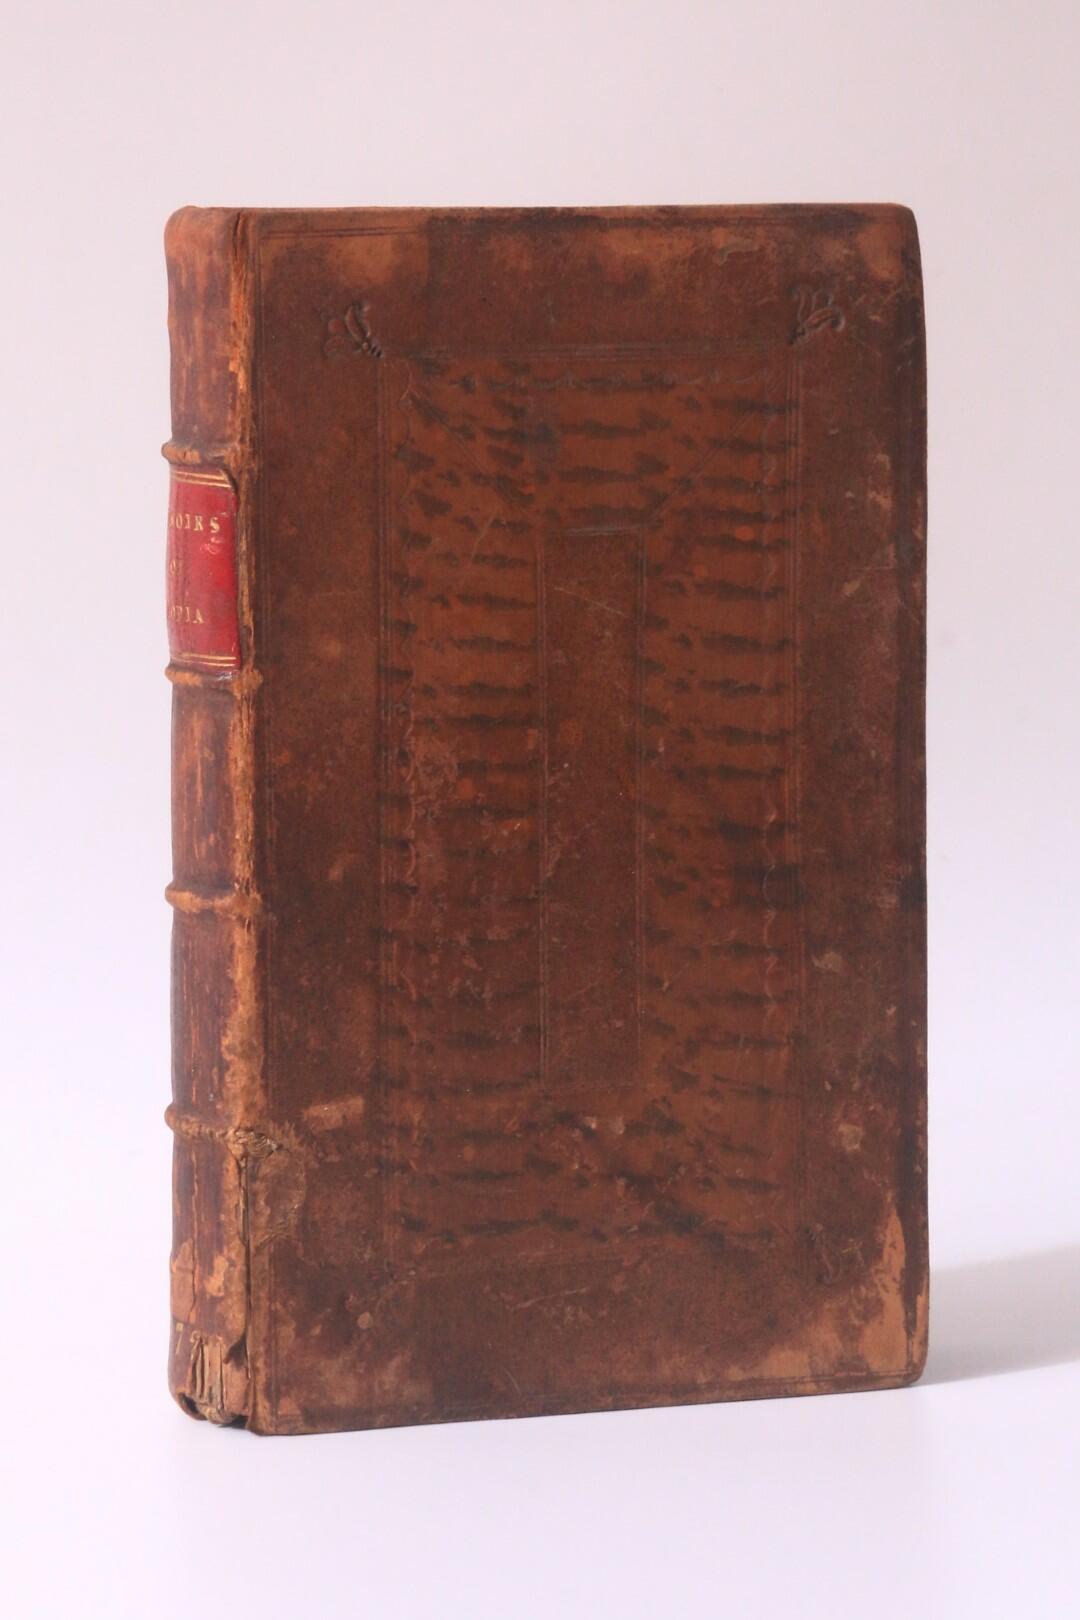 Eliza Haywood - Memoirs of a Certain Island Adjacent to the Kingdom of Utopia - R. Gunne & P. Dugan, 1725, First Edition.